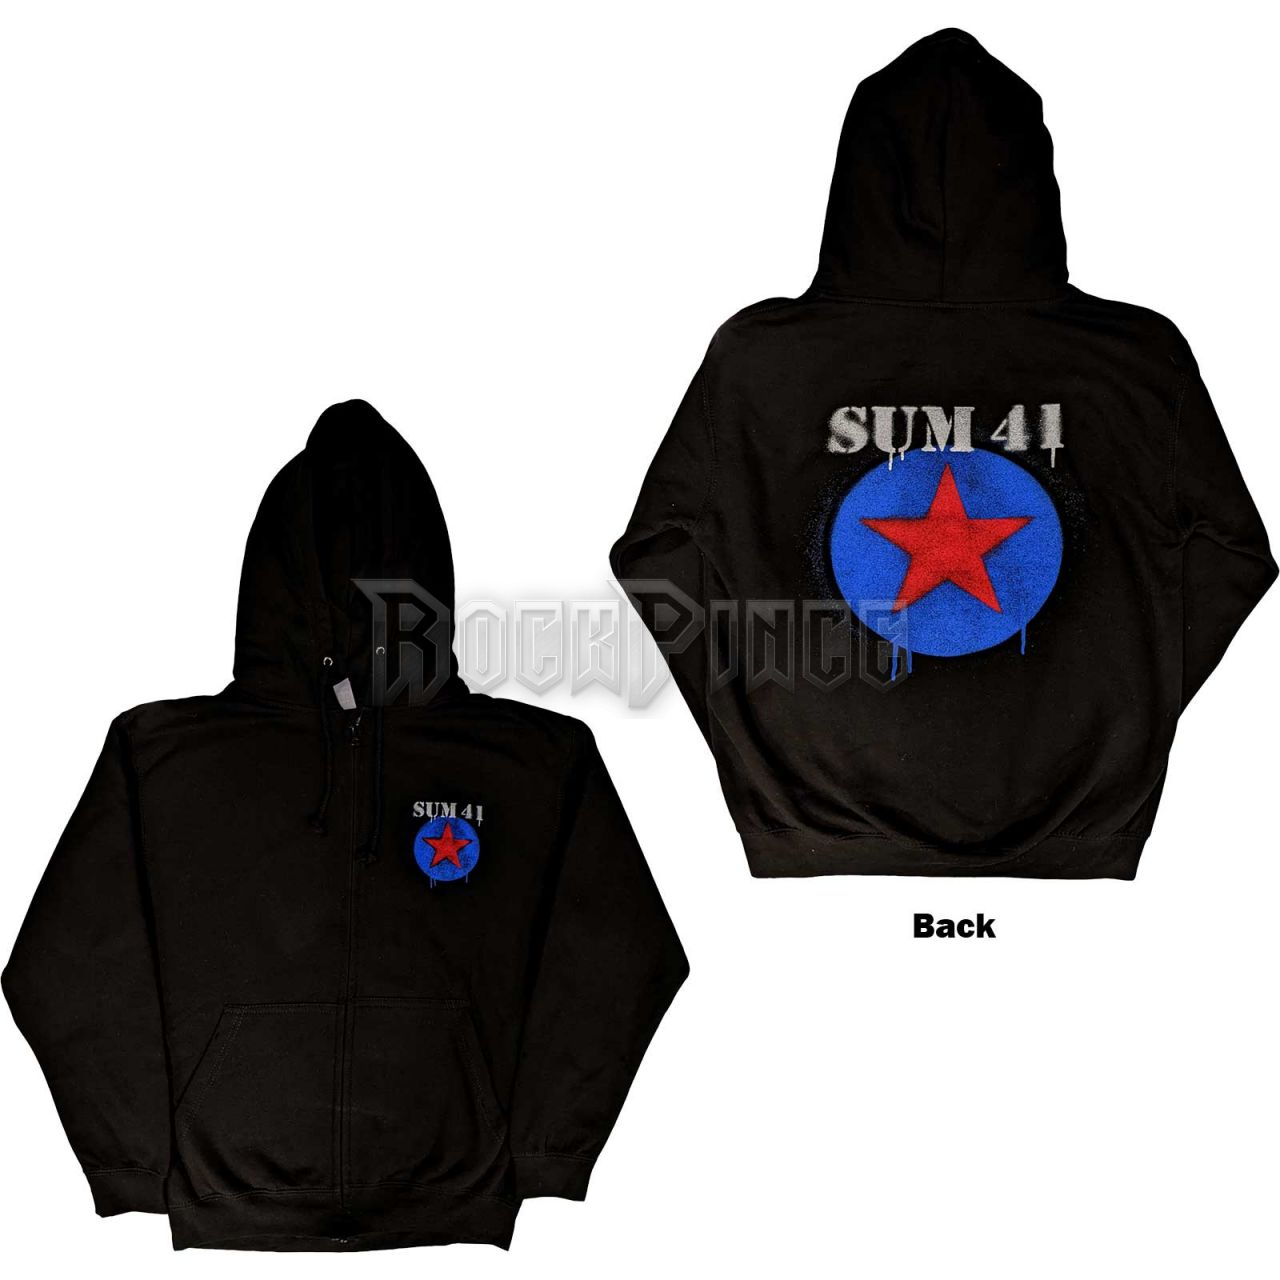 Sum 41 - Star Logo - unisex cipzáras kapucnis pulóver - SUMZHD14MB